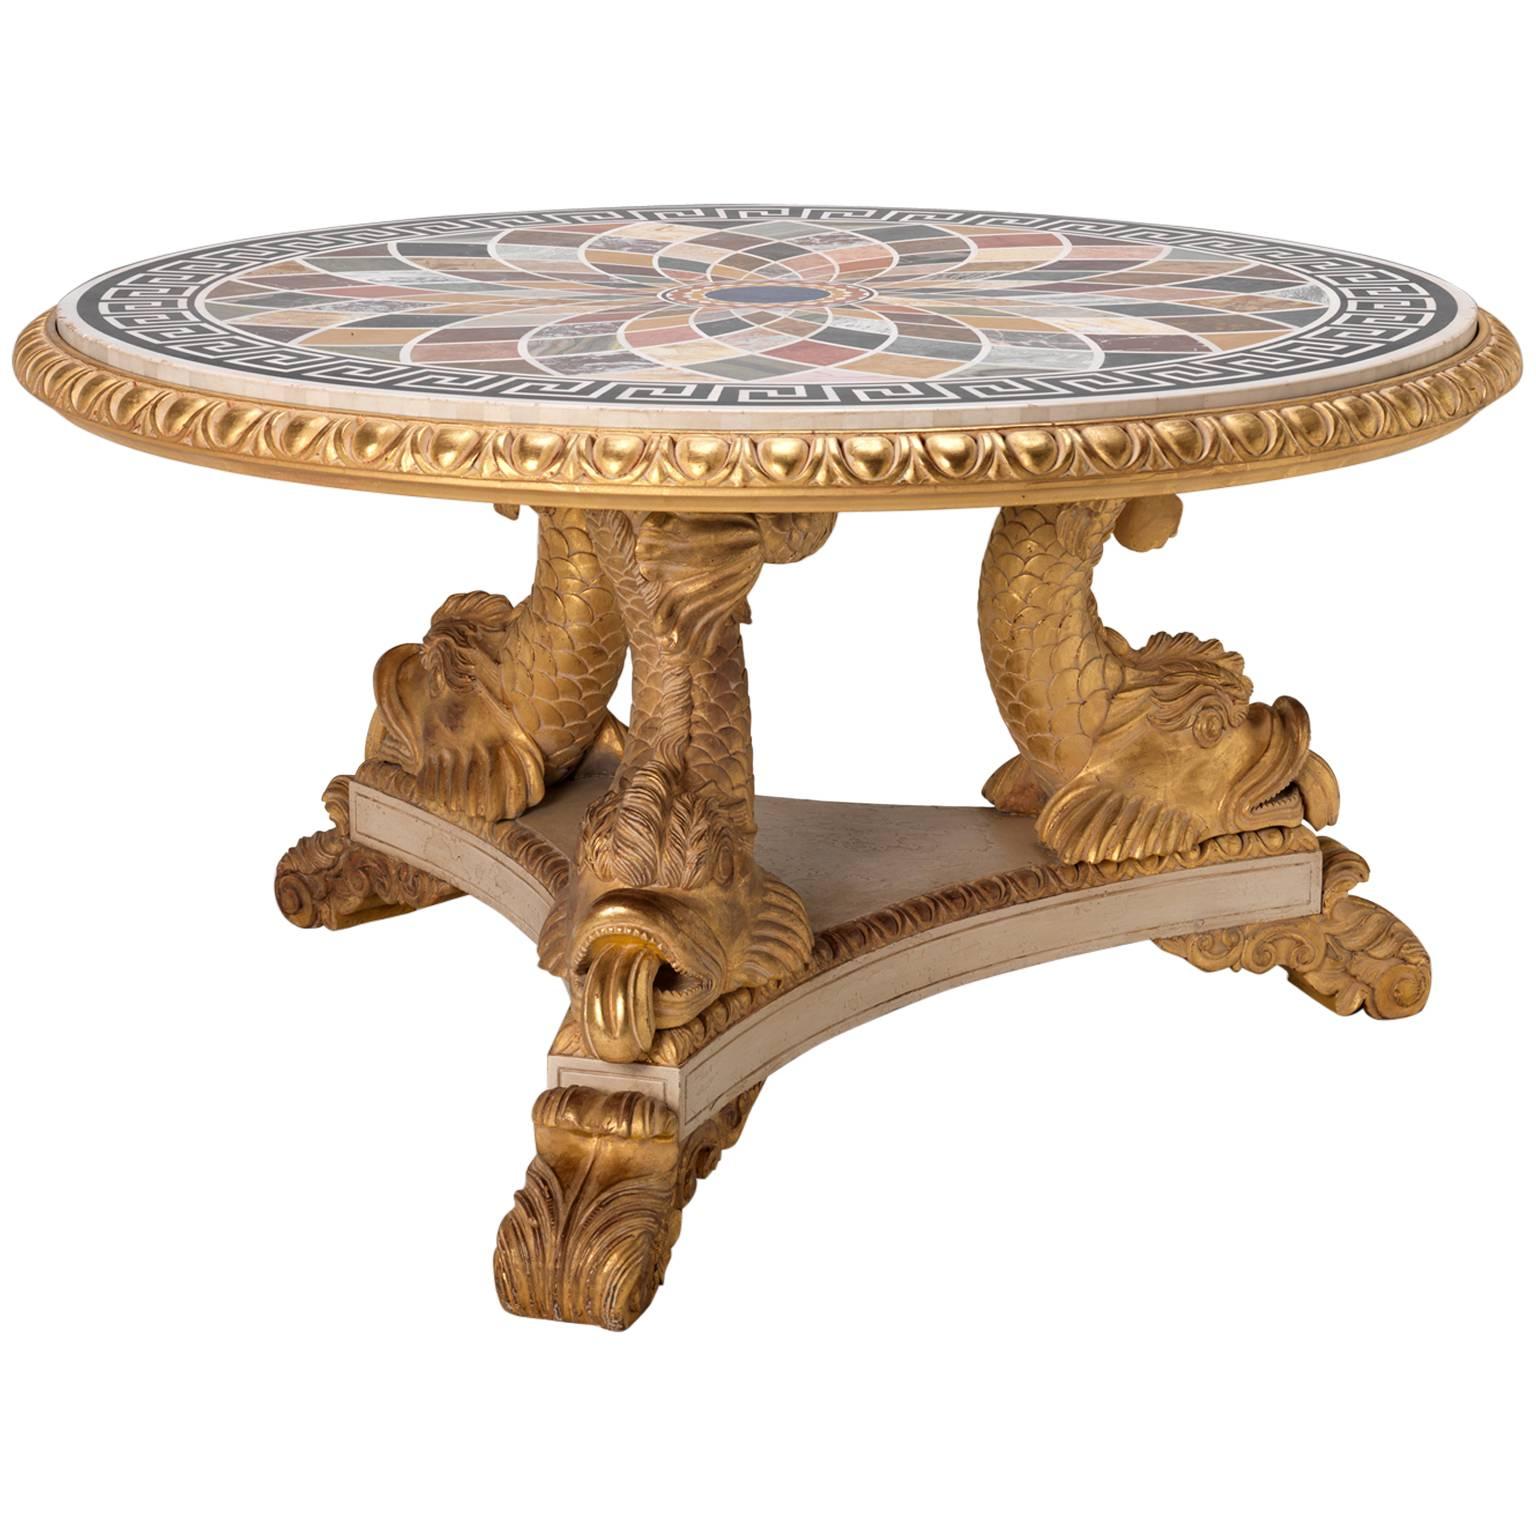 Table de salon en forme de dauphin avec plateau en marbre de style Regency